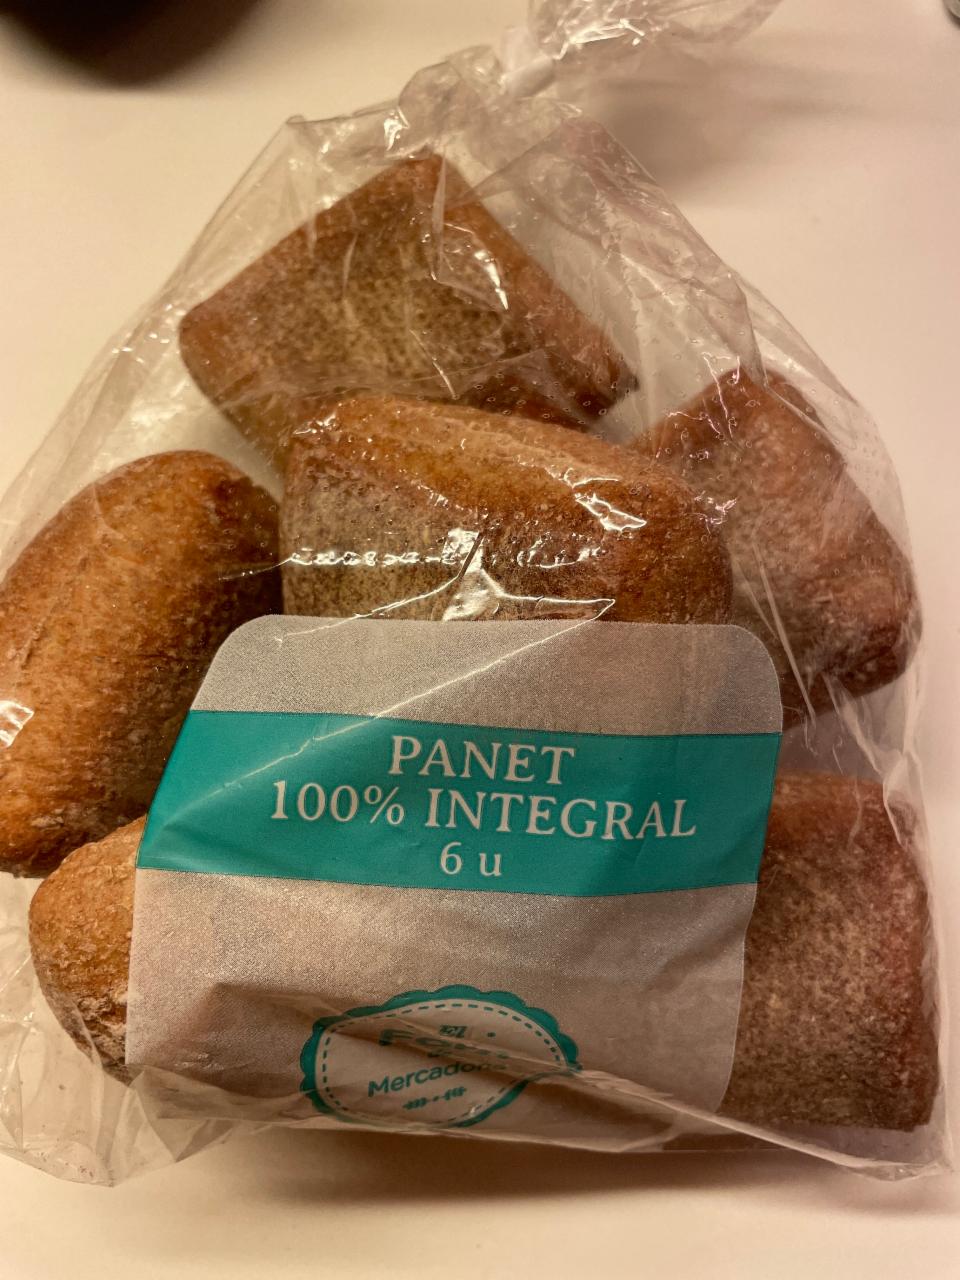 Фото - Хлеб отрубной Panet 100% Integral Mercadona